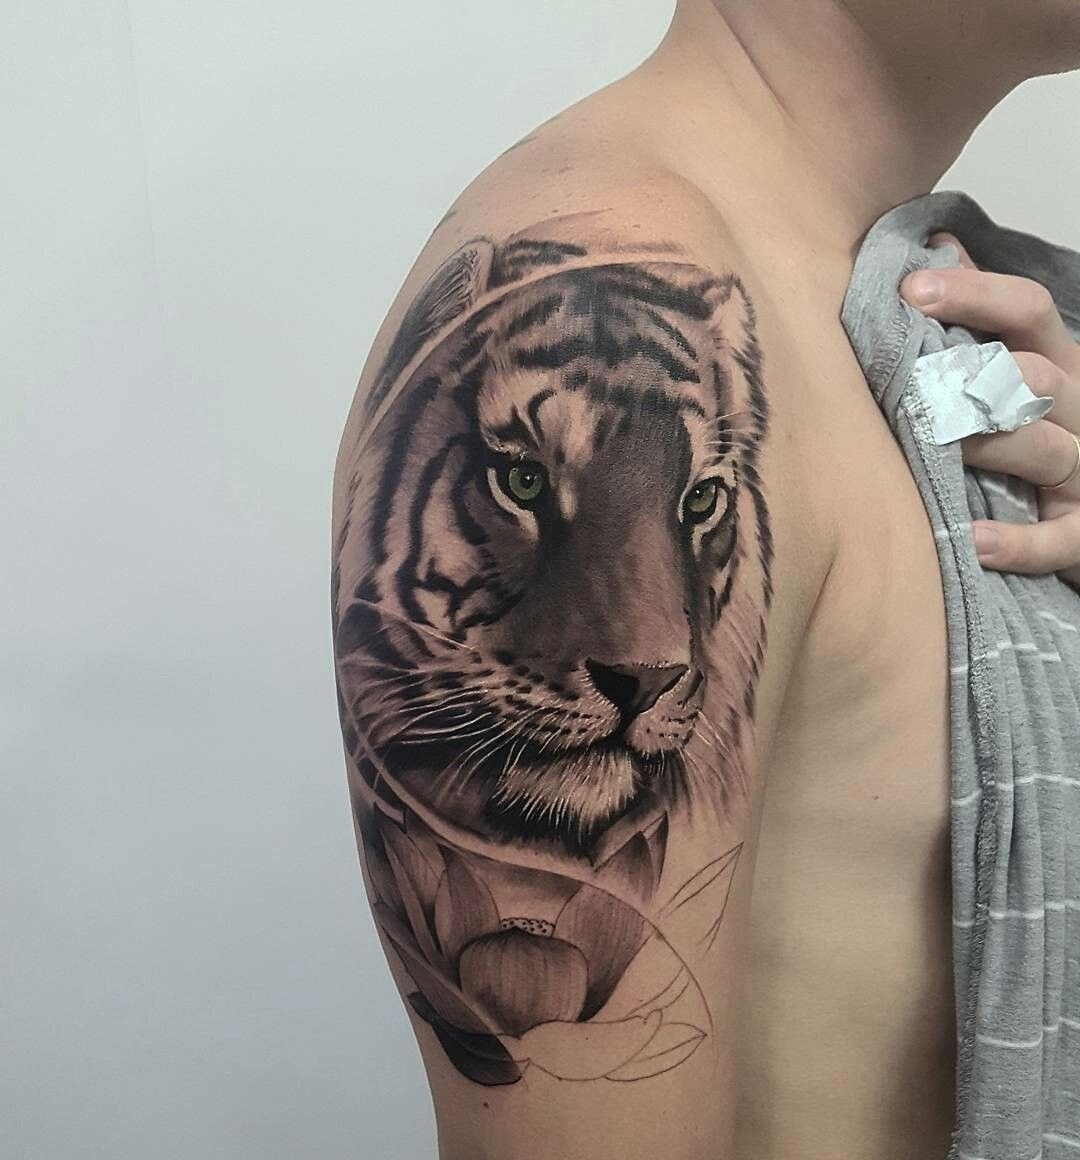 Tiger Shoulder Tattoo National Animal Of Korea Body Art In 2019 inside proportions 1080 X 1160